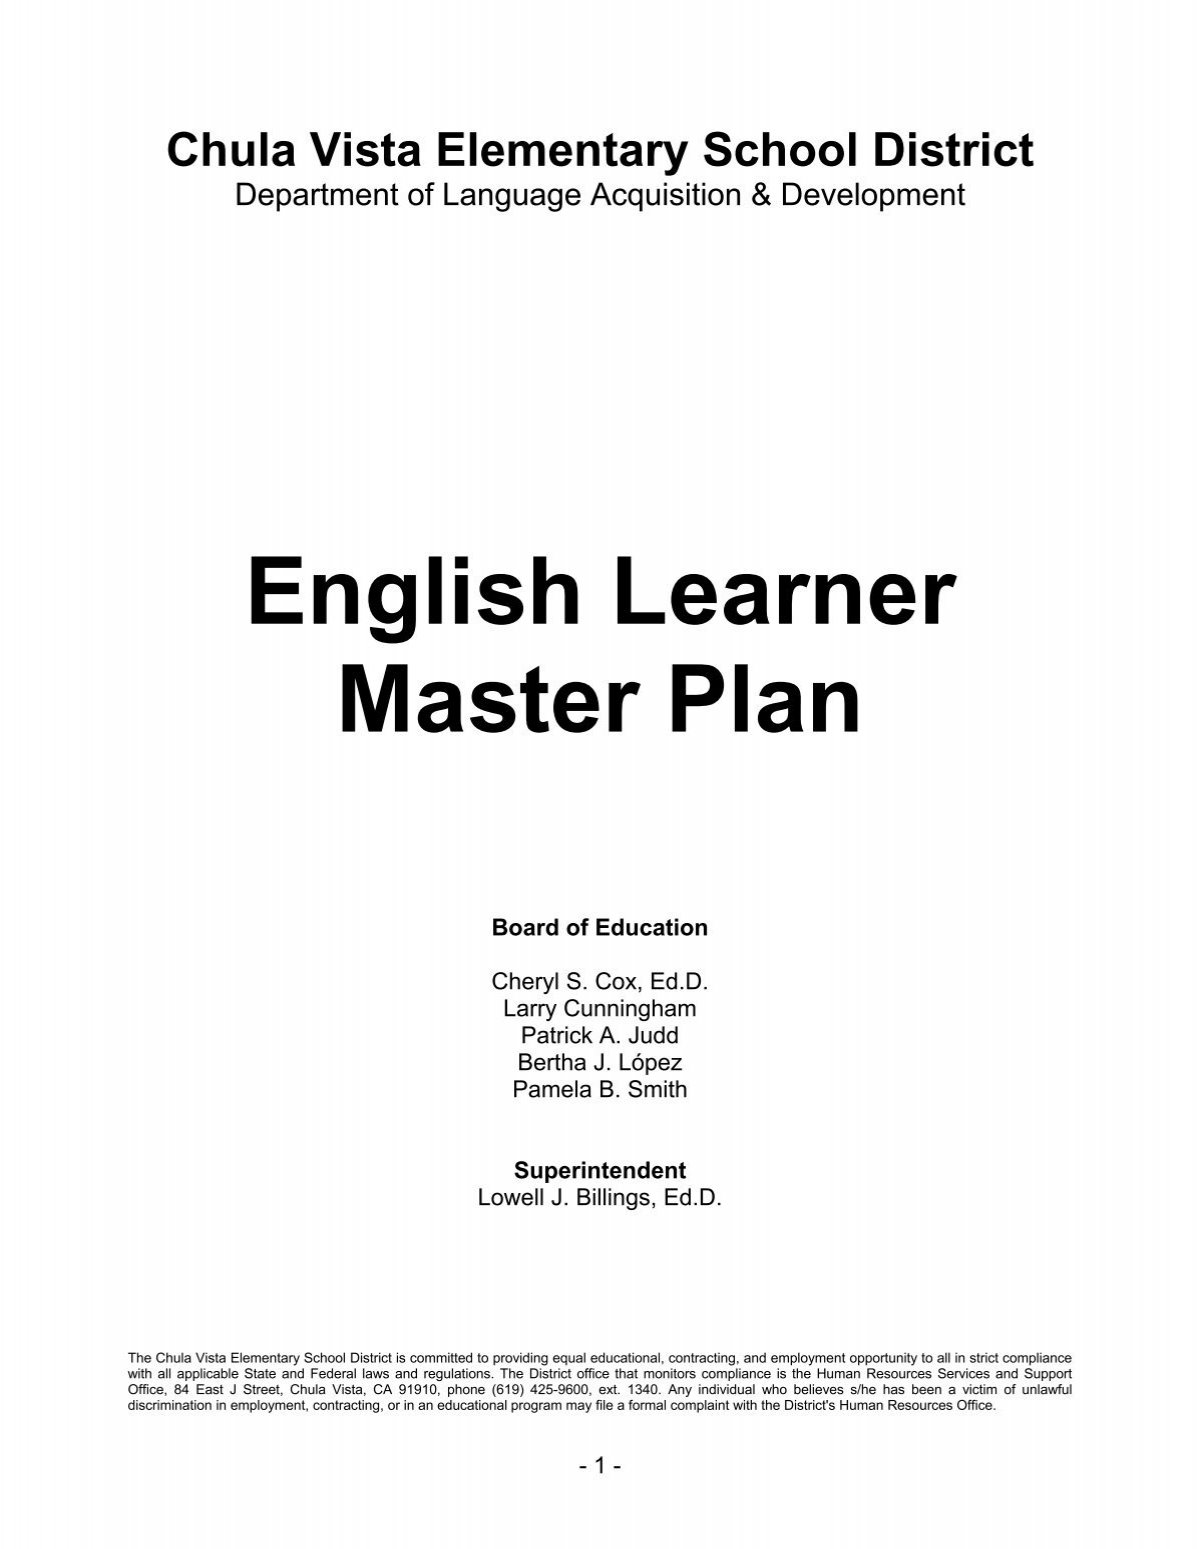 English Learner Master Plan - Chula Vista Elementary School District